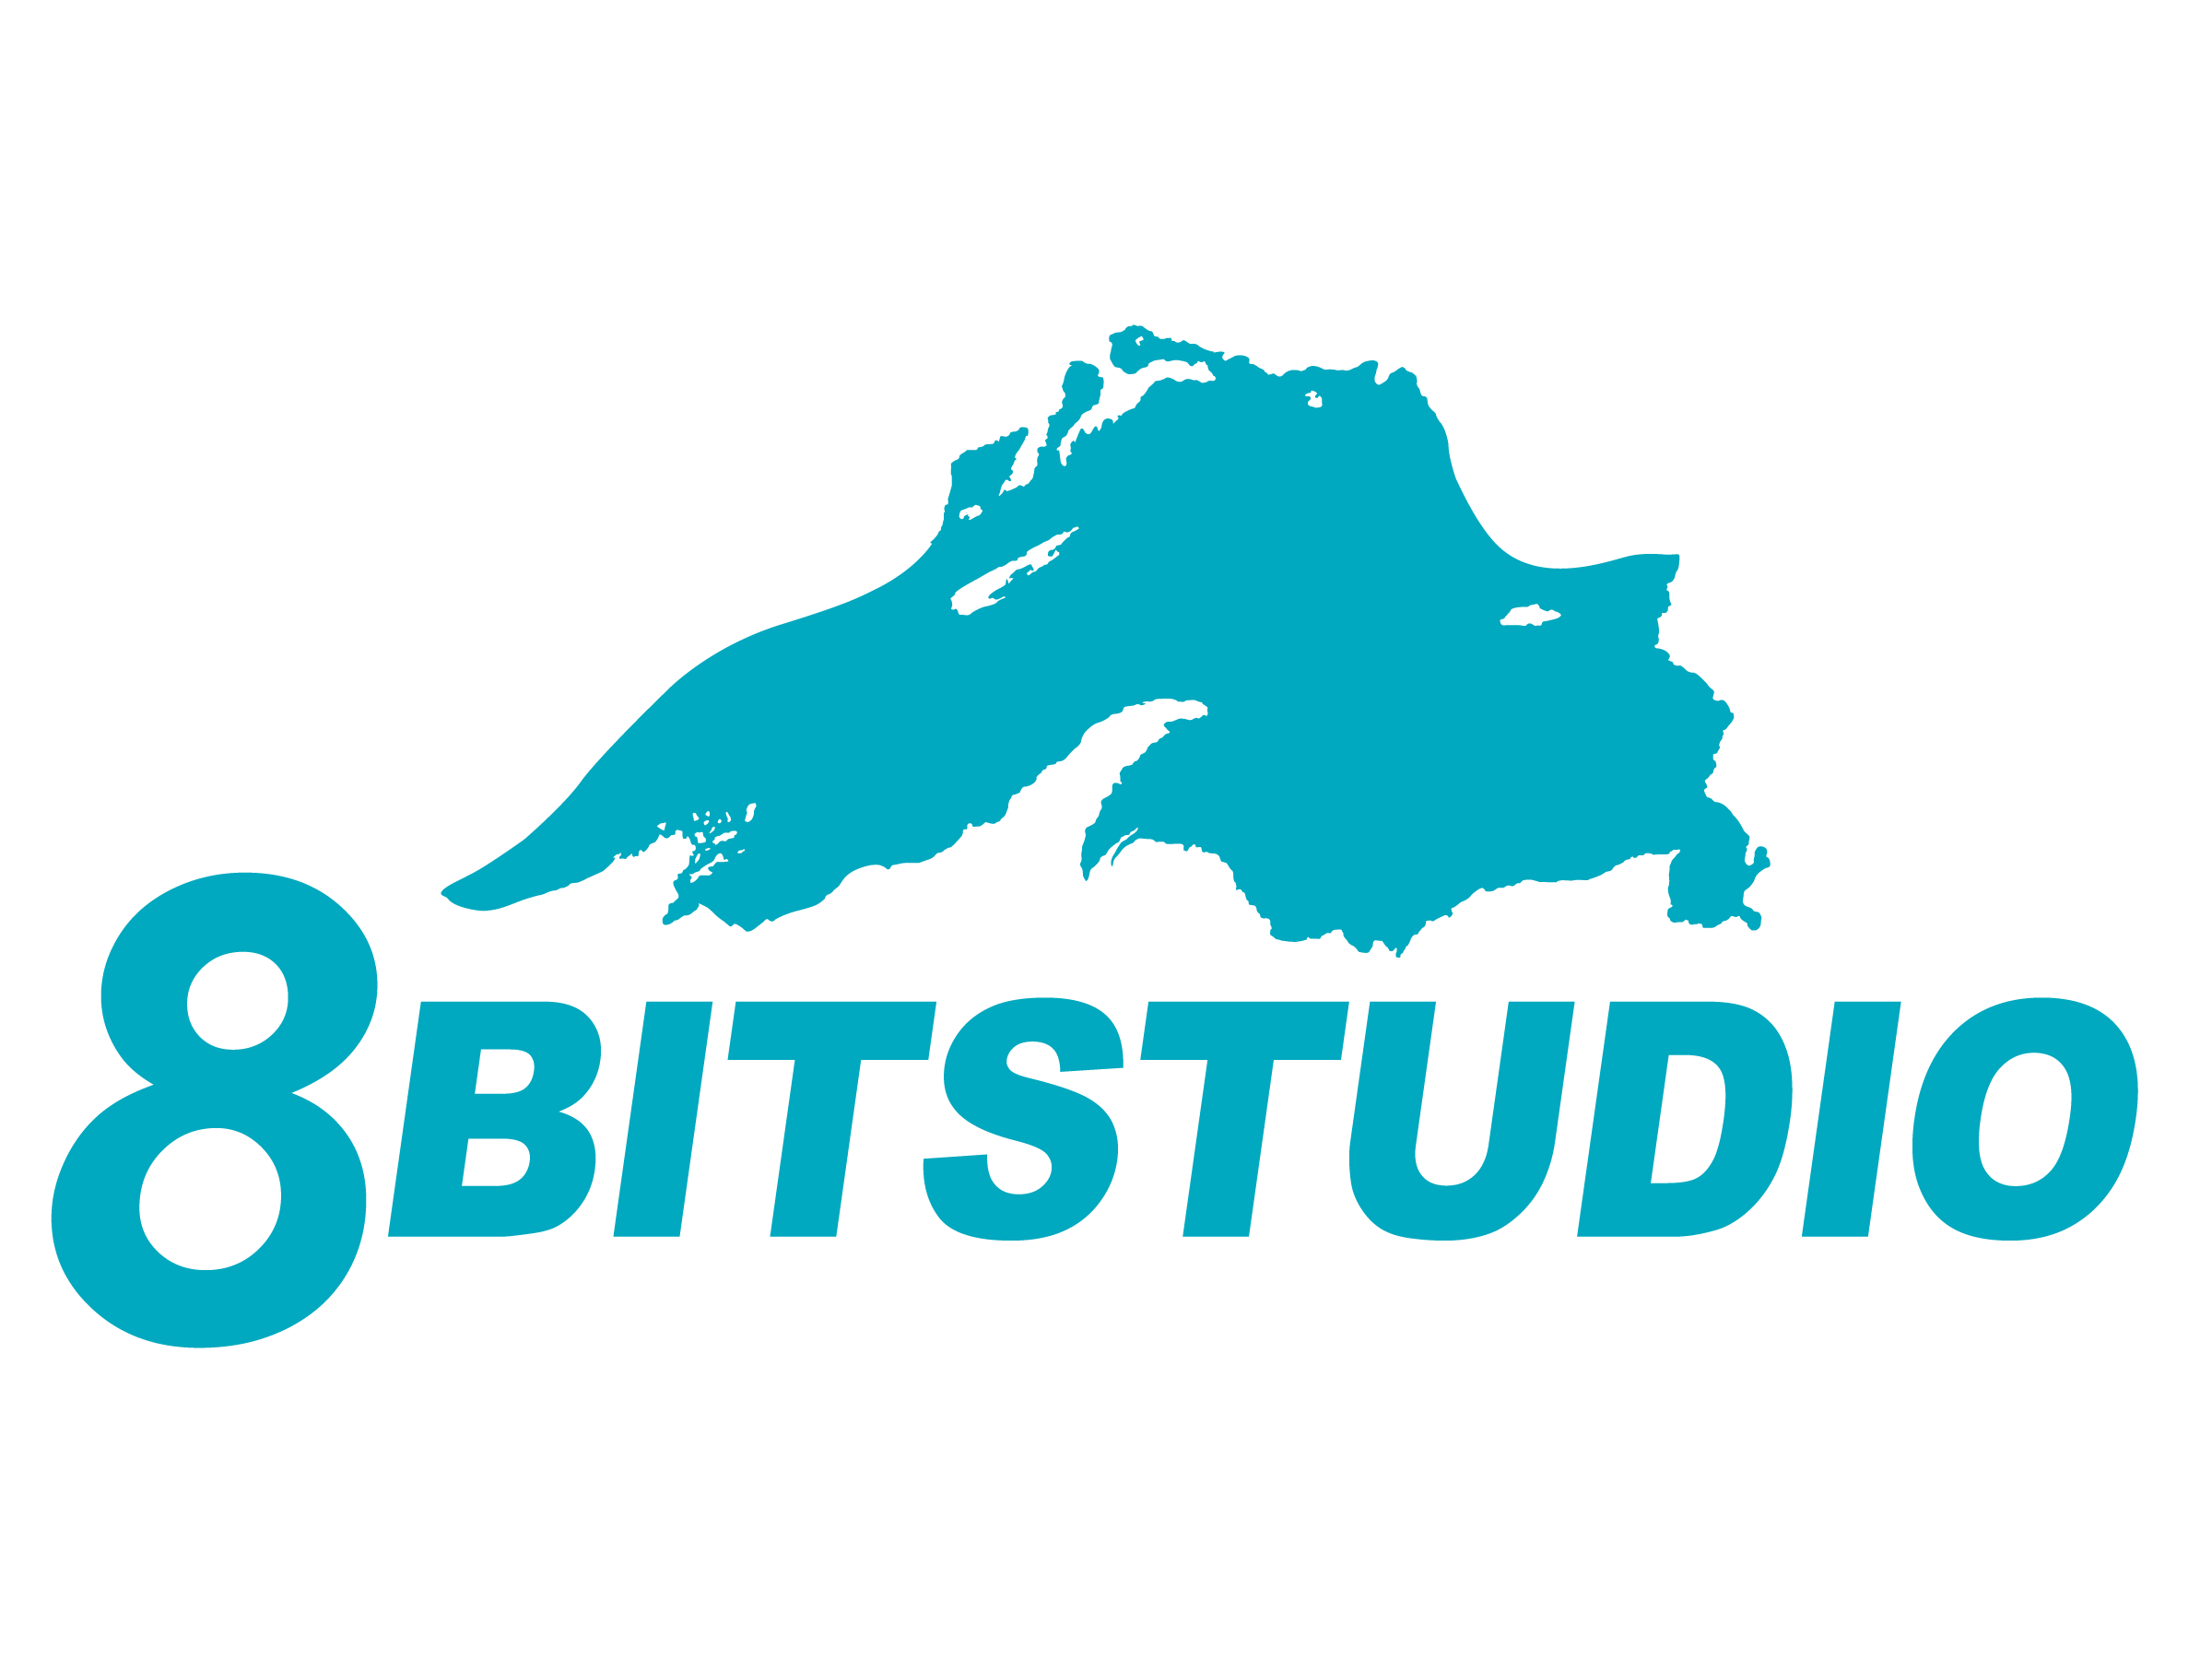 8Bitstudio logo